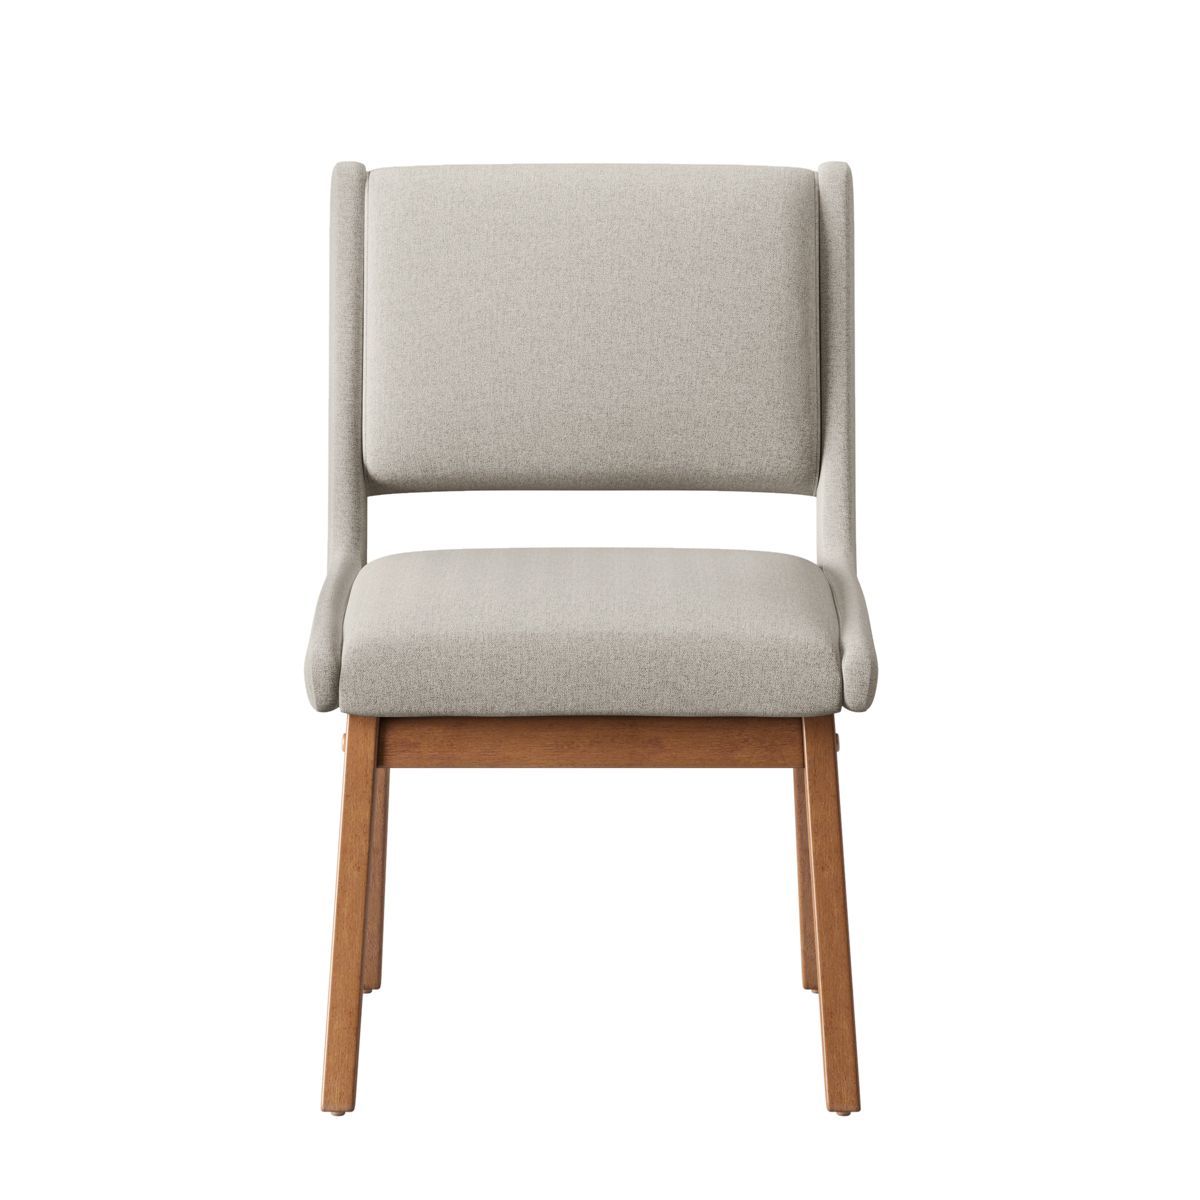 Holmdel Mid-Century Dining Chair Beige - Threshold™ | Target